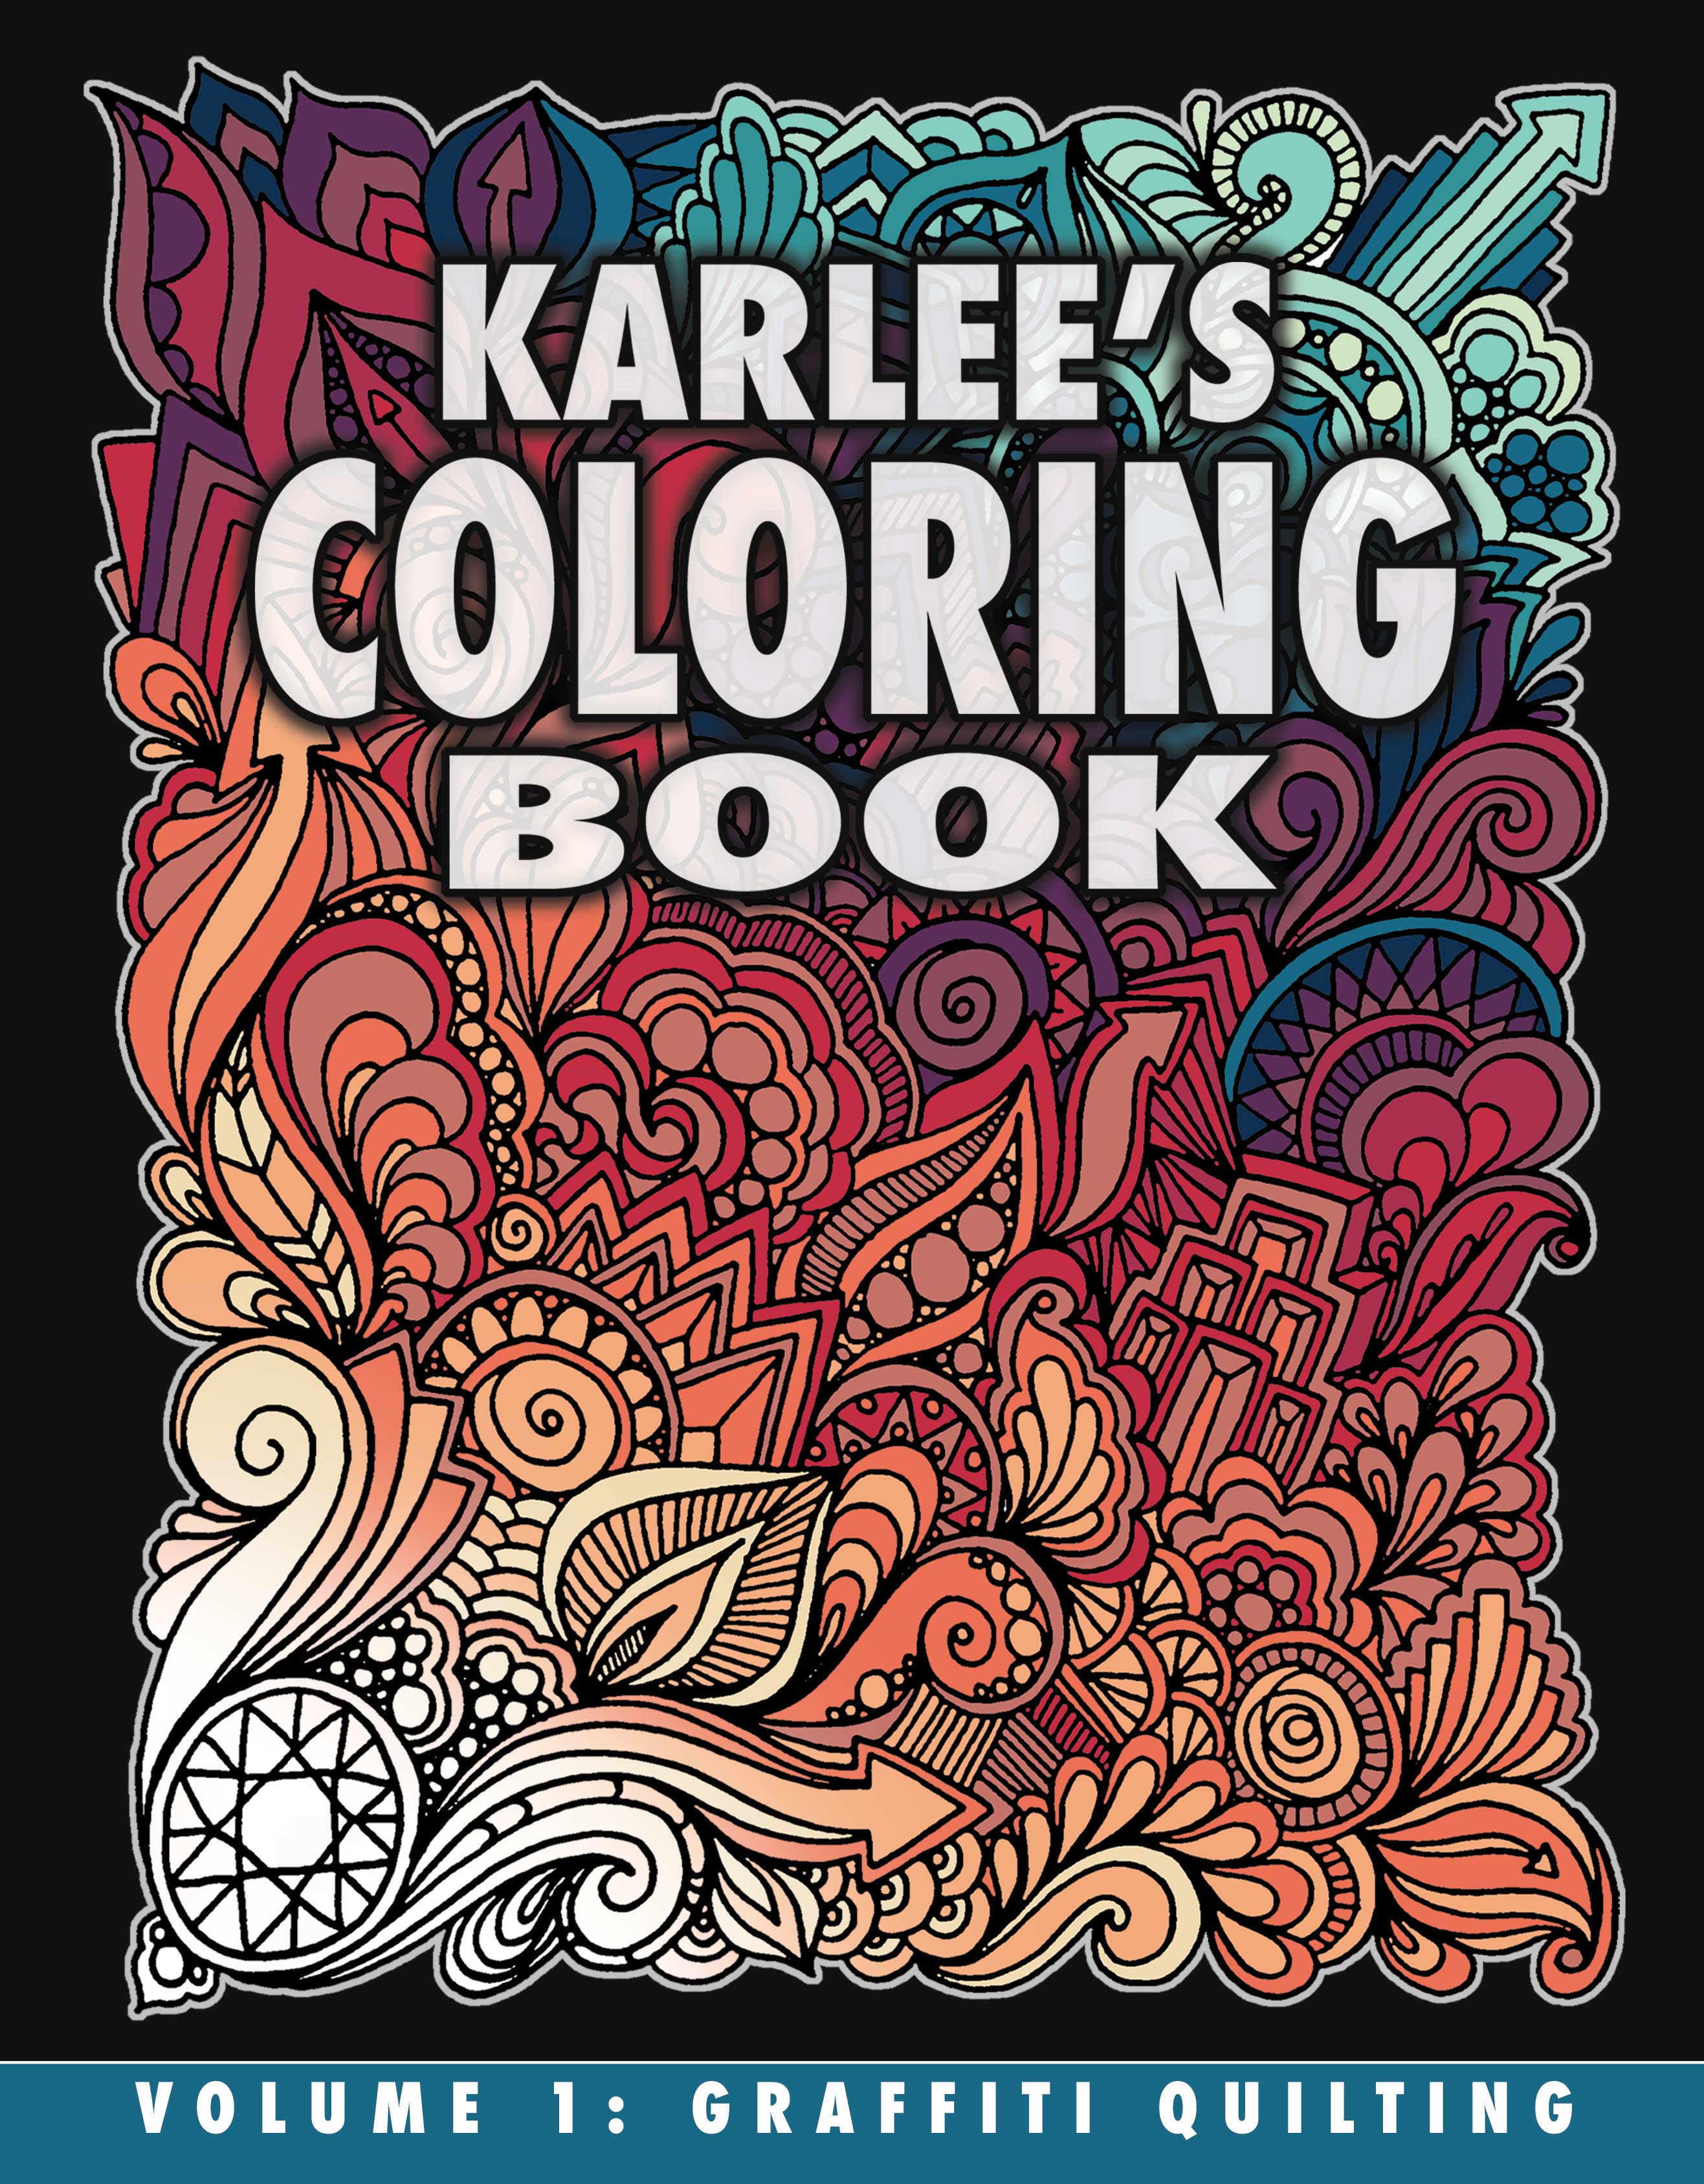 Karlee's Coloring Book Vol. 1 – Graffiti Quilting – Karlee Porter